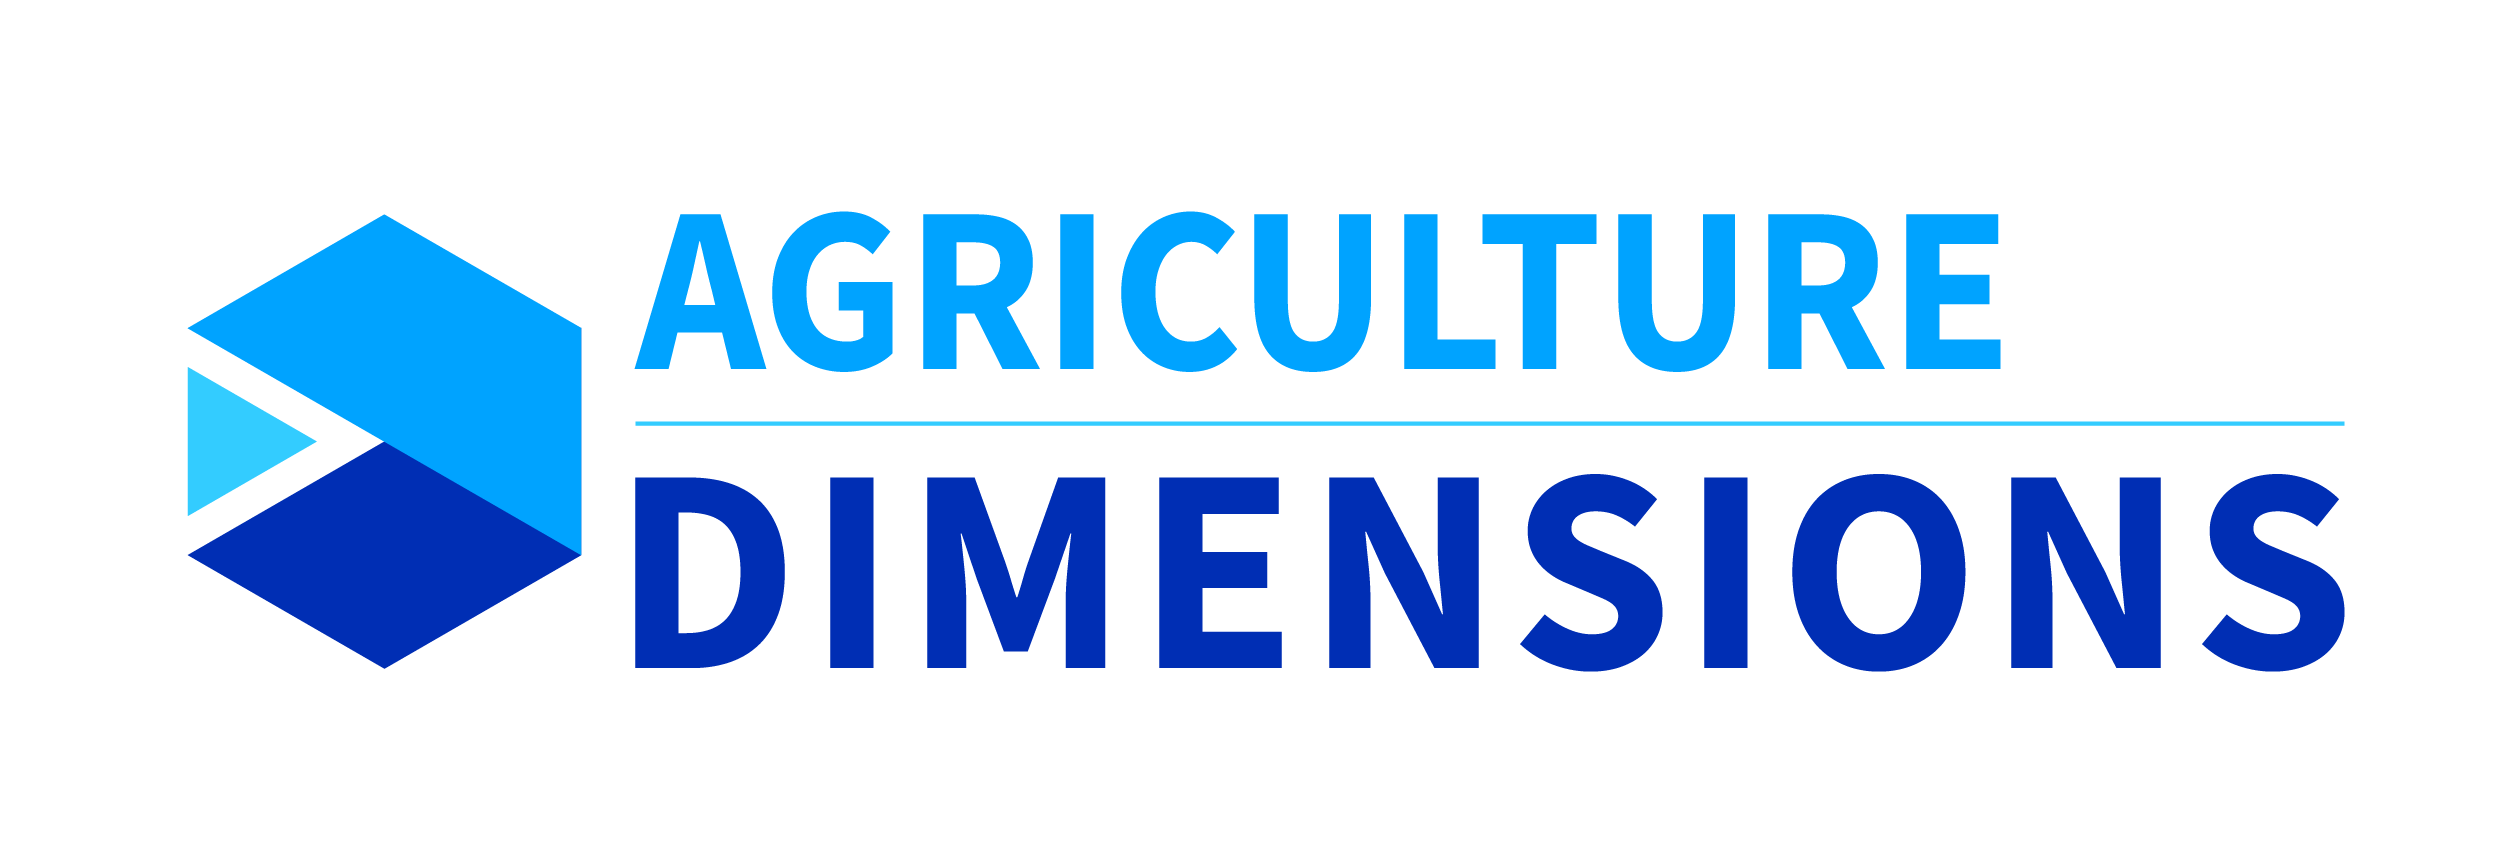 Dimensiones de la agricultura - Acceltech Pte Ltd